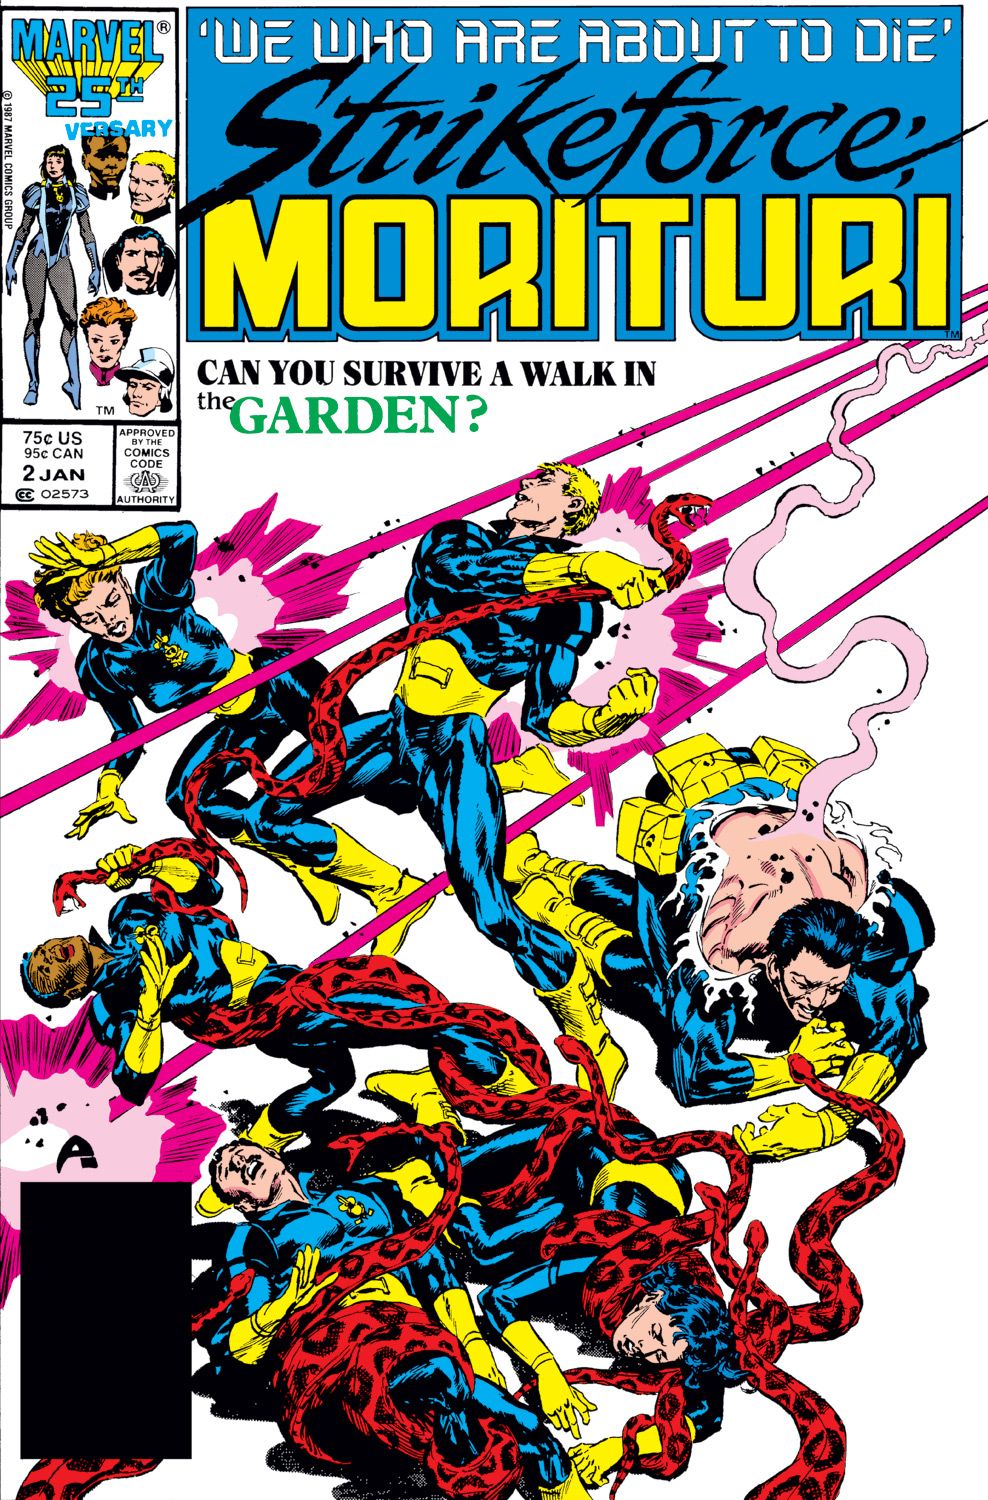 Strikeforce: Morituri #2 - The Garden released by Marvel on January 1, 1987